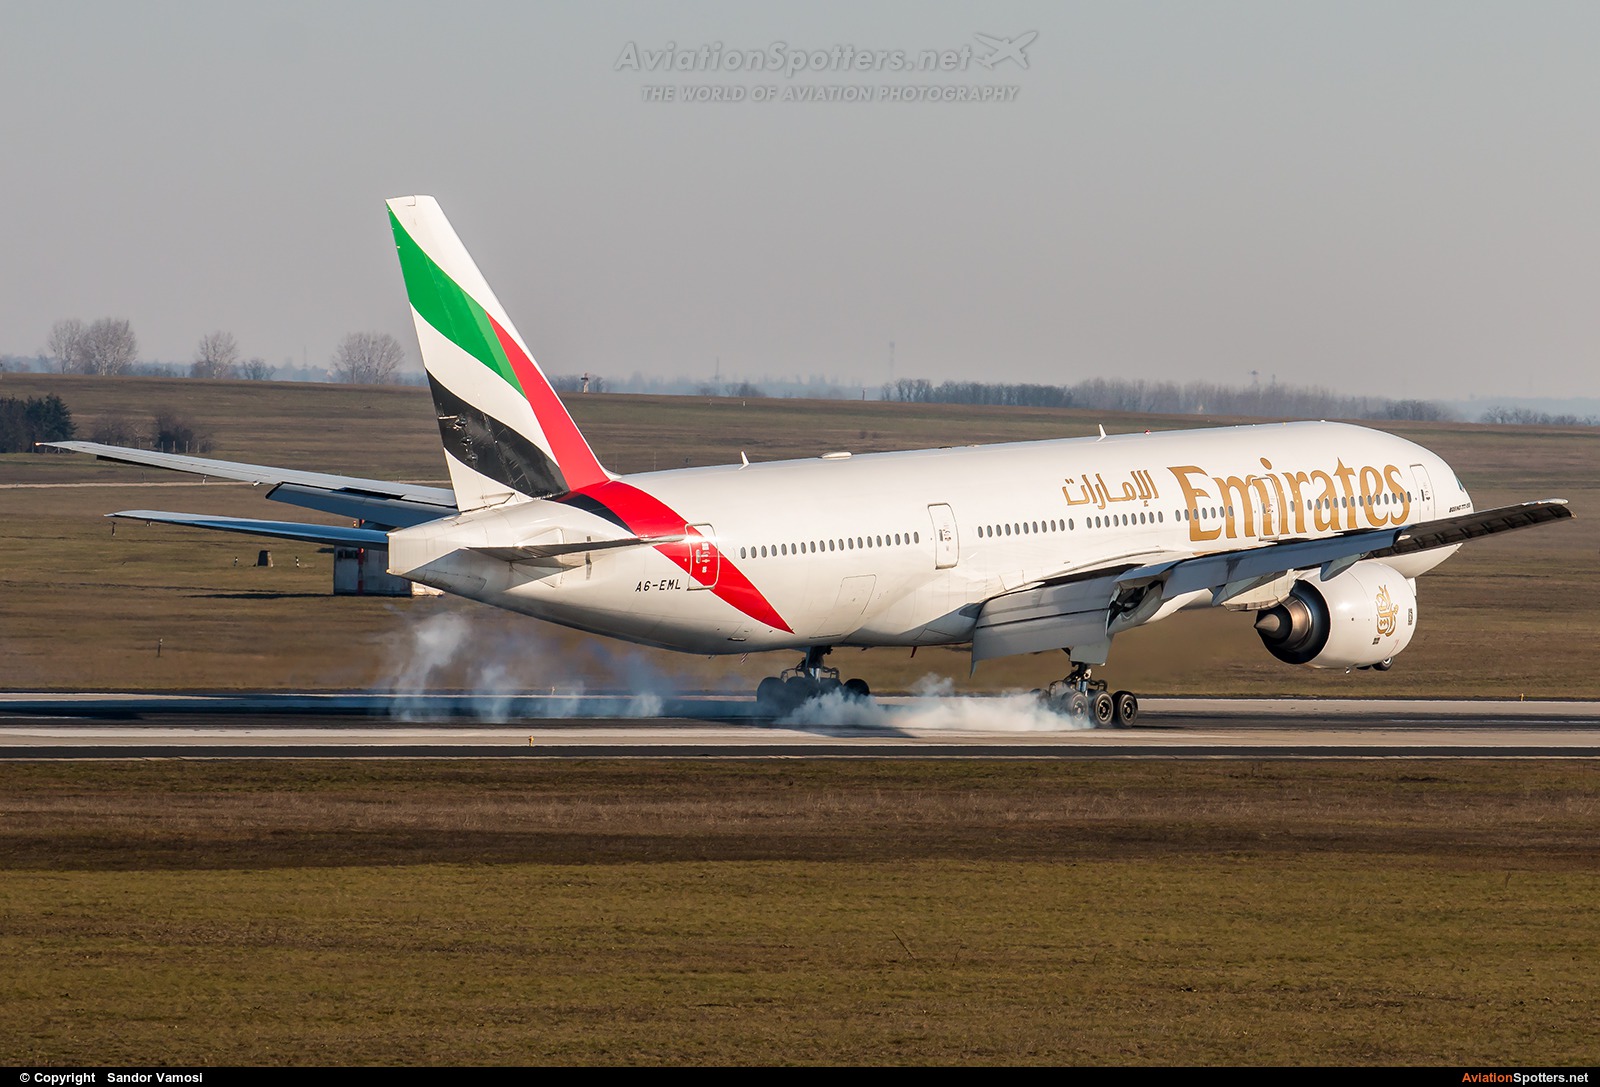 Emirates Airlines  -  777-200ER  (A6-EML) By Sandor Vamosi (ALEX67)